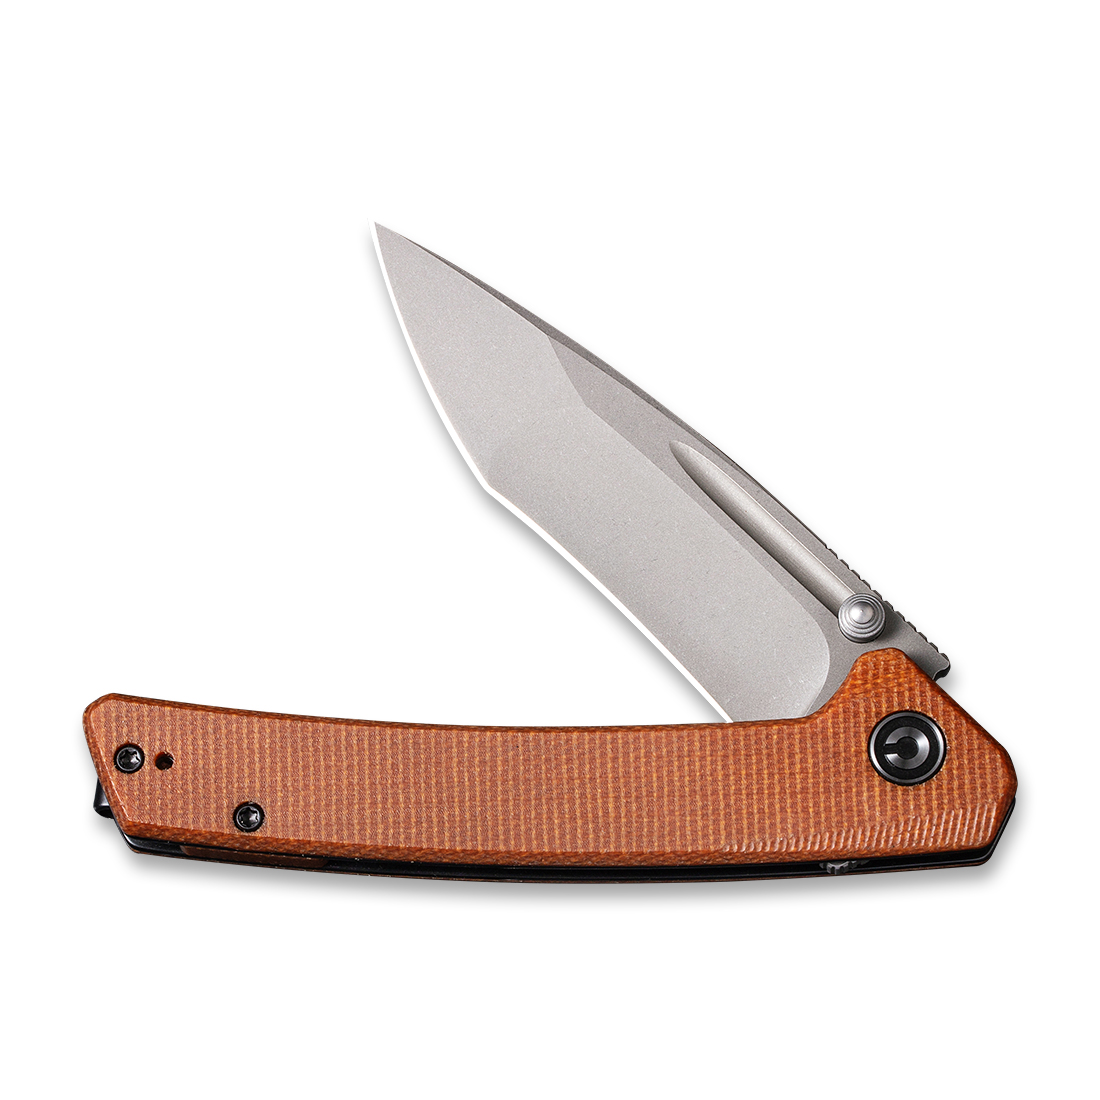 CIVIVI Keen Nadder Liner Lock C2021B Knife N690 Stainless Steel & Brown G10 Pocket Knives